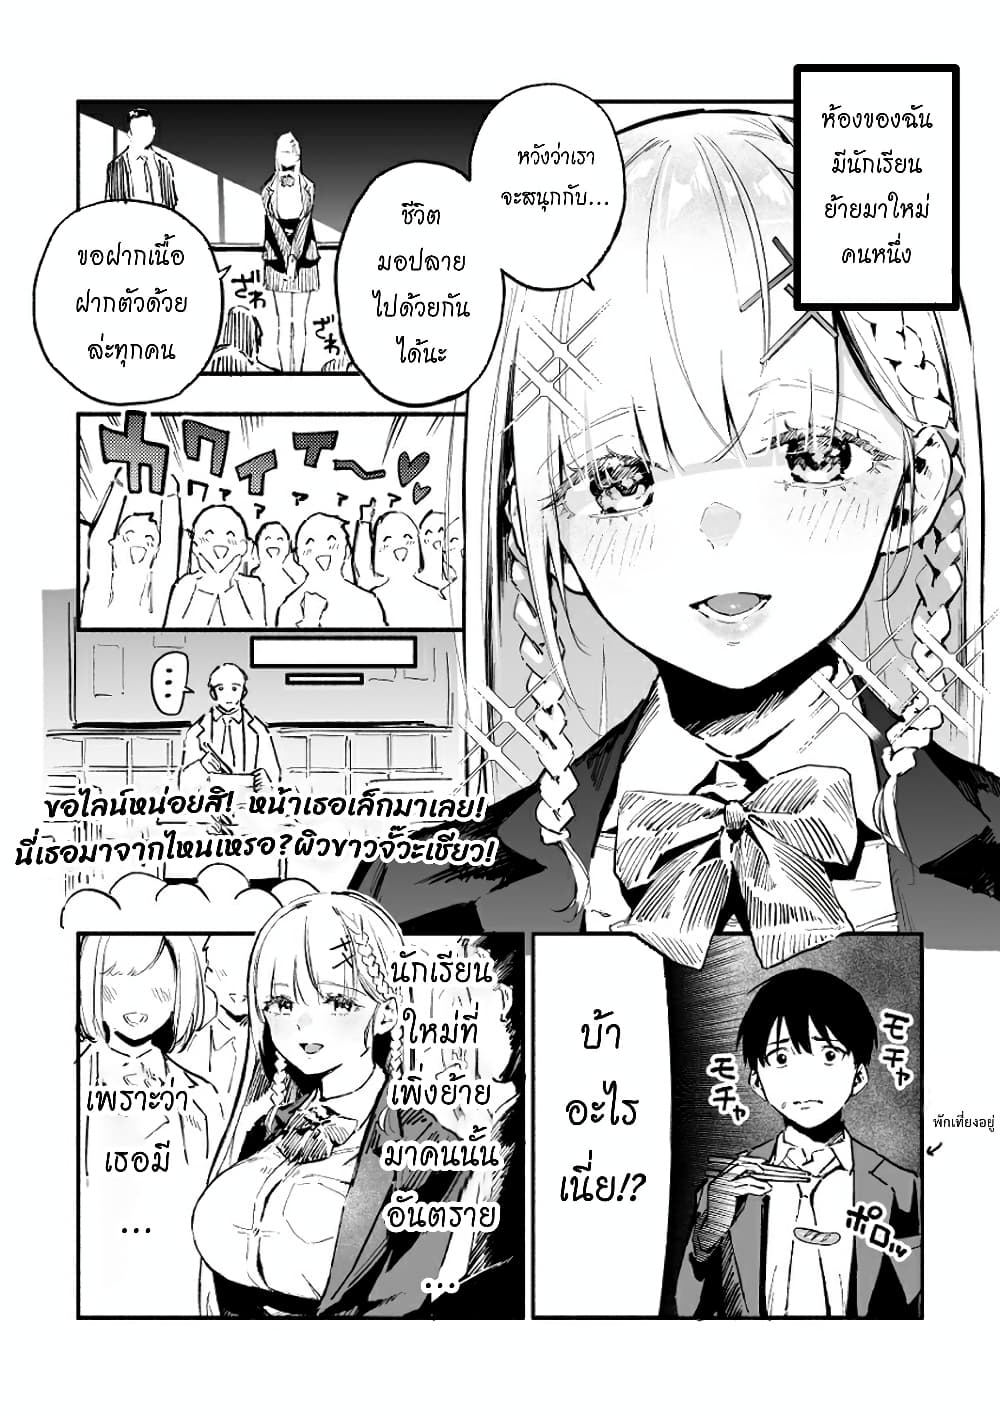 The Angelic Transfer Student and Mastophobia-kun 1-1